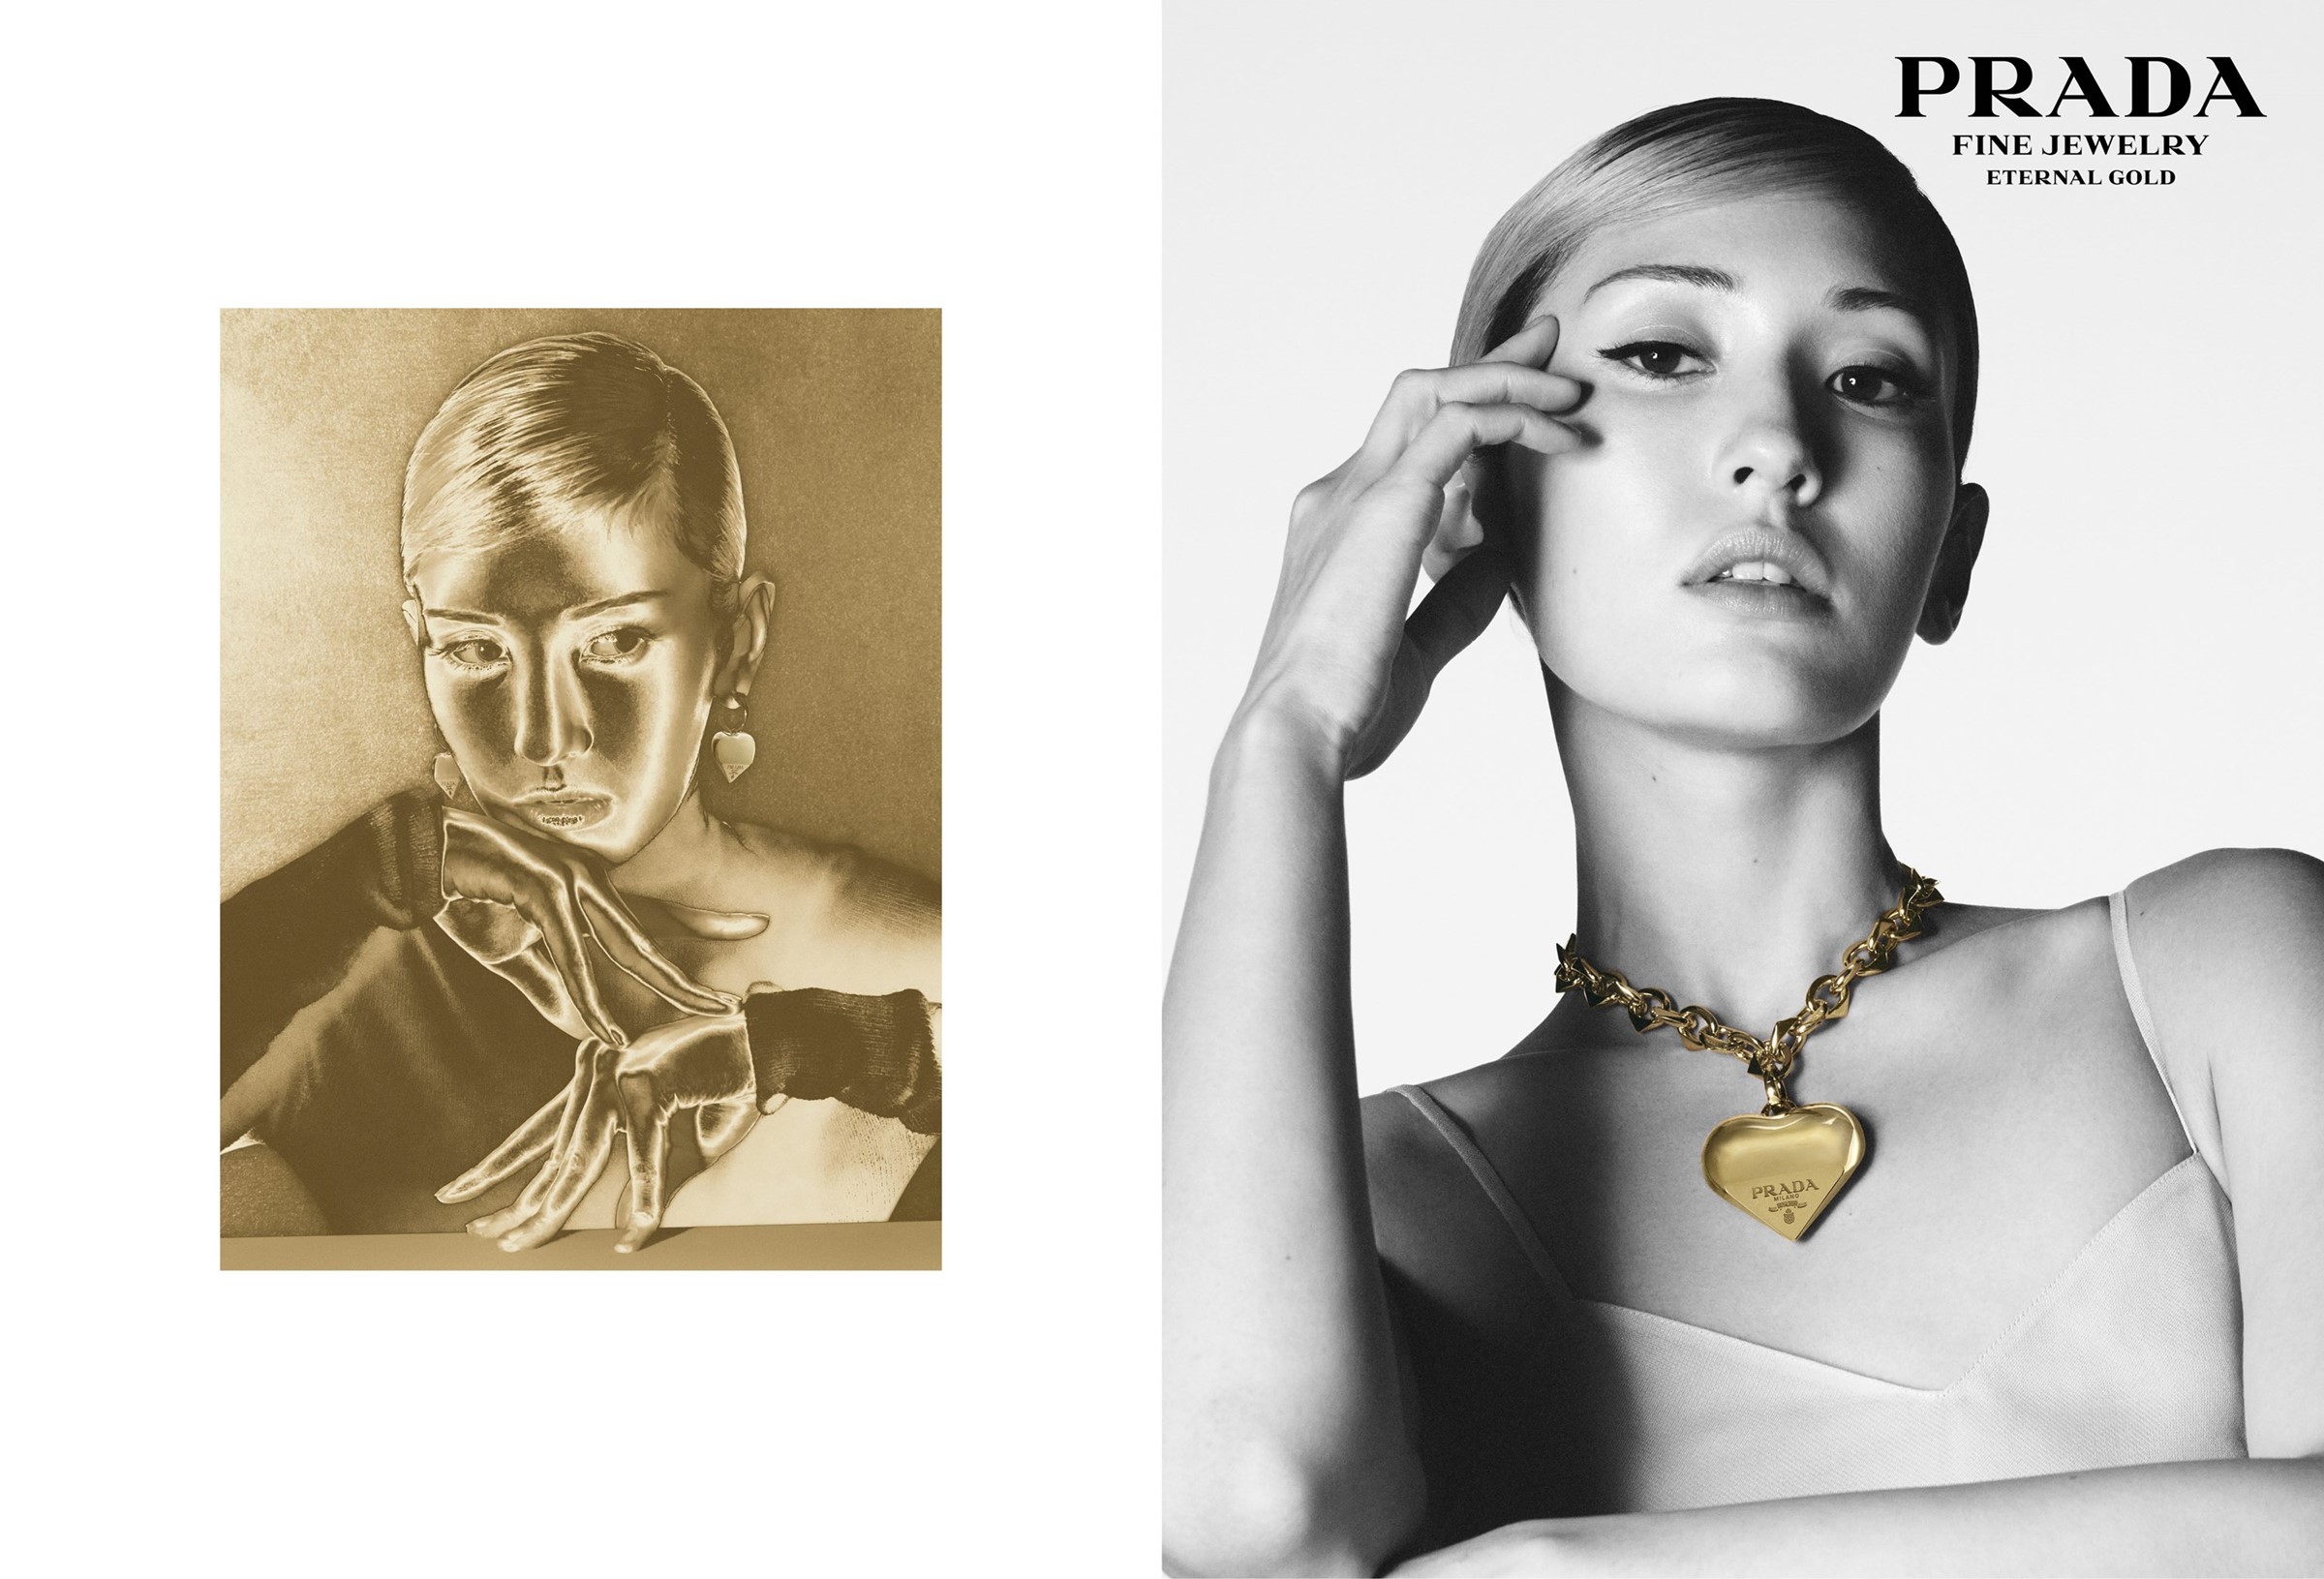 Prada Eternal Gold Fall 2022 ad campaign photos